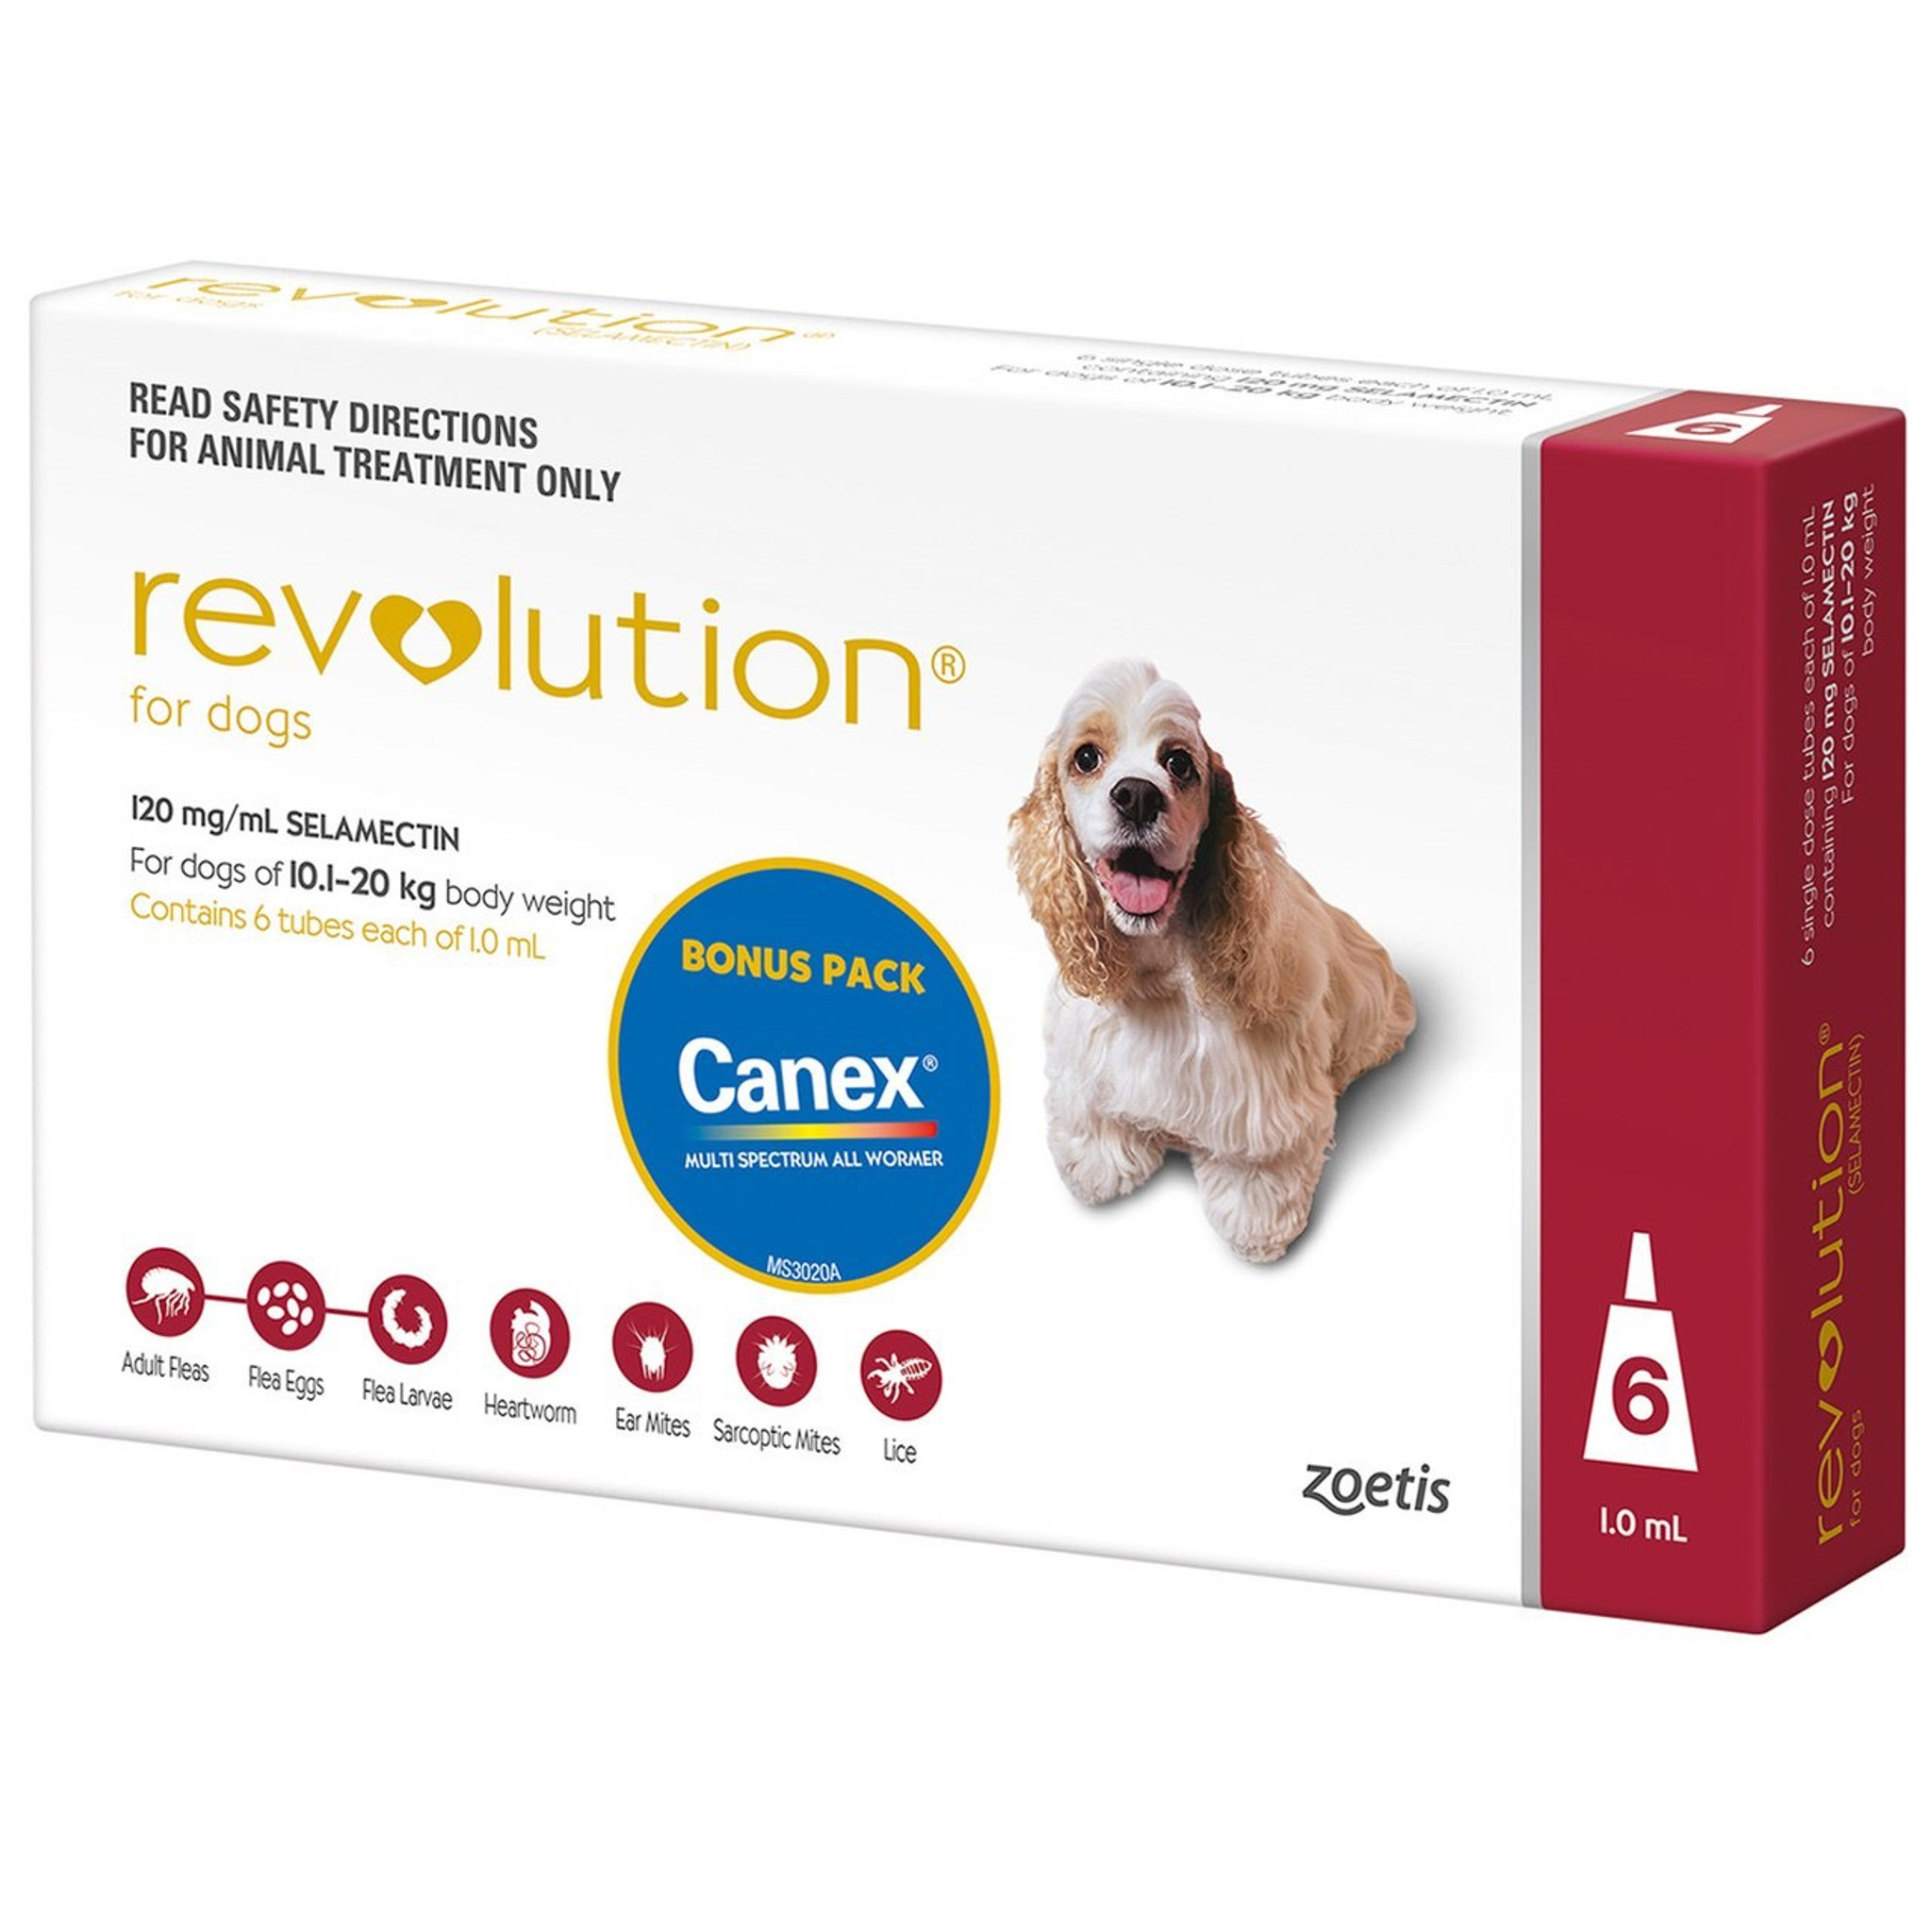 Revolution for Dogs 10.1-20 kg - Red 6 